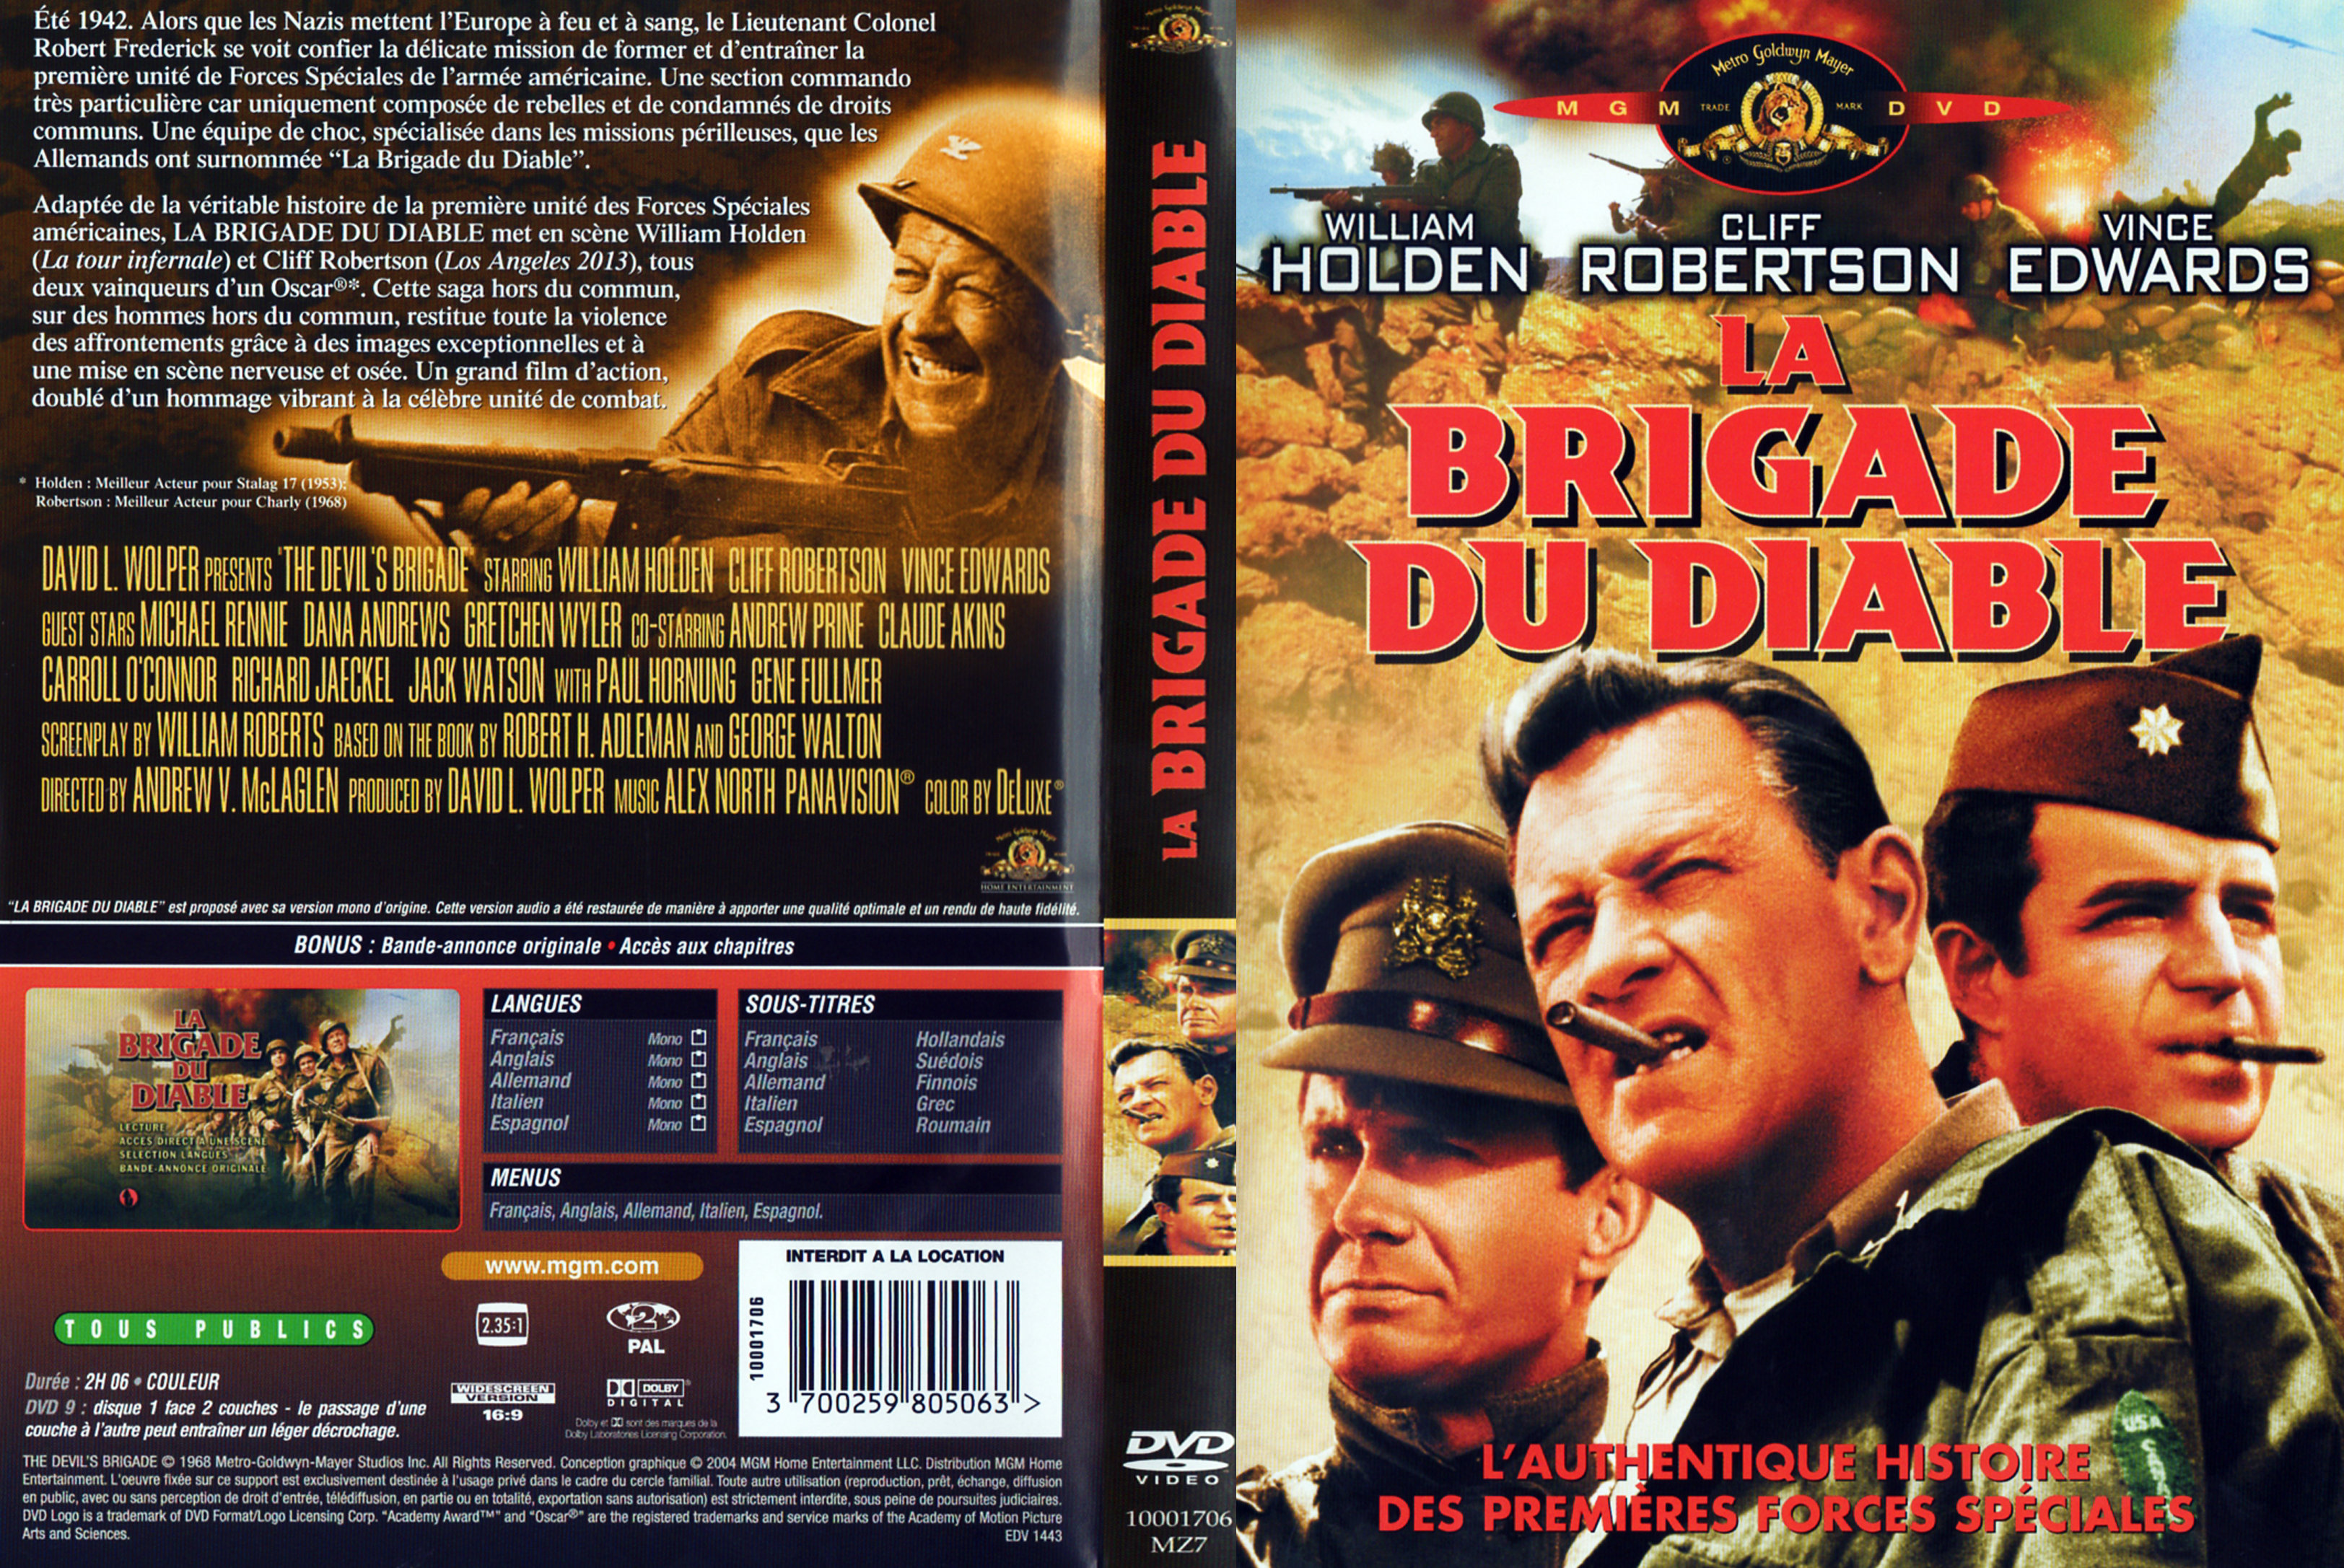 Jaquette DVD La brigade du diable v2